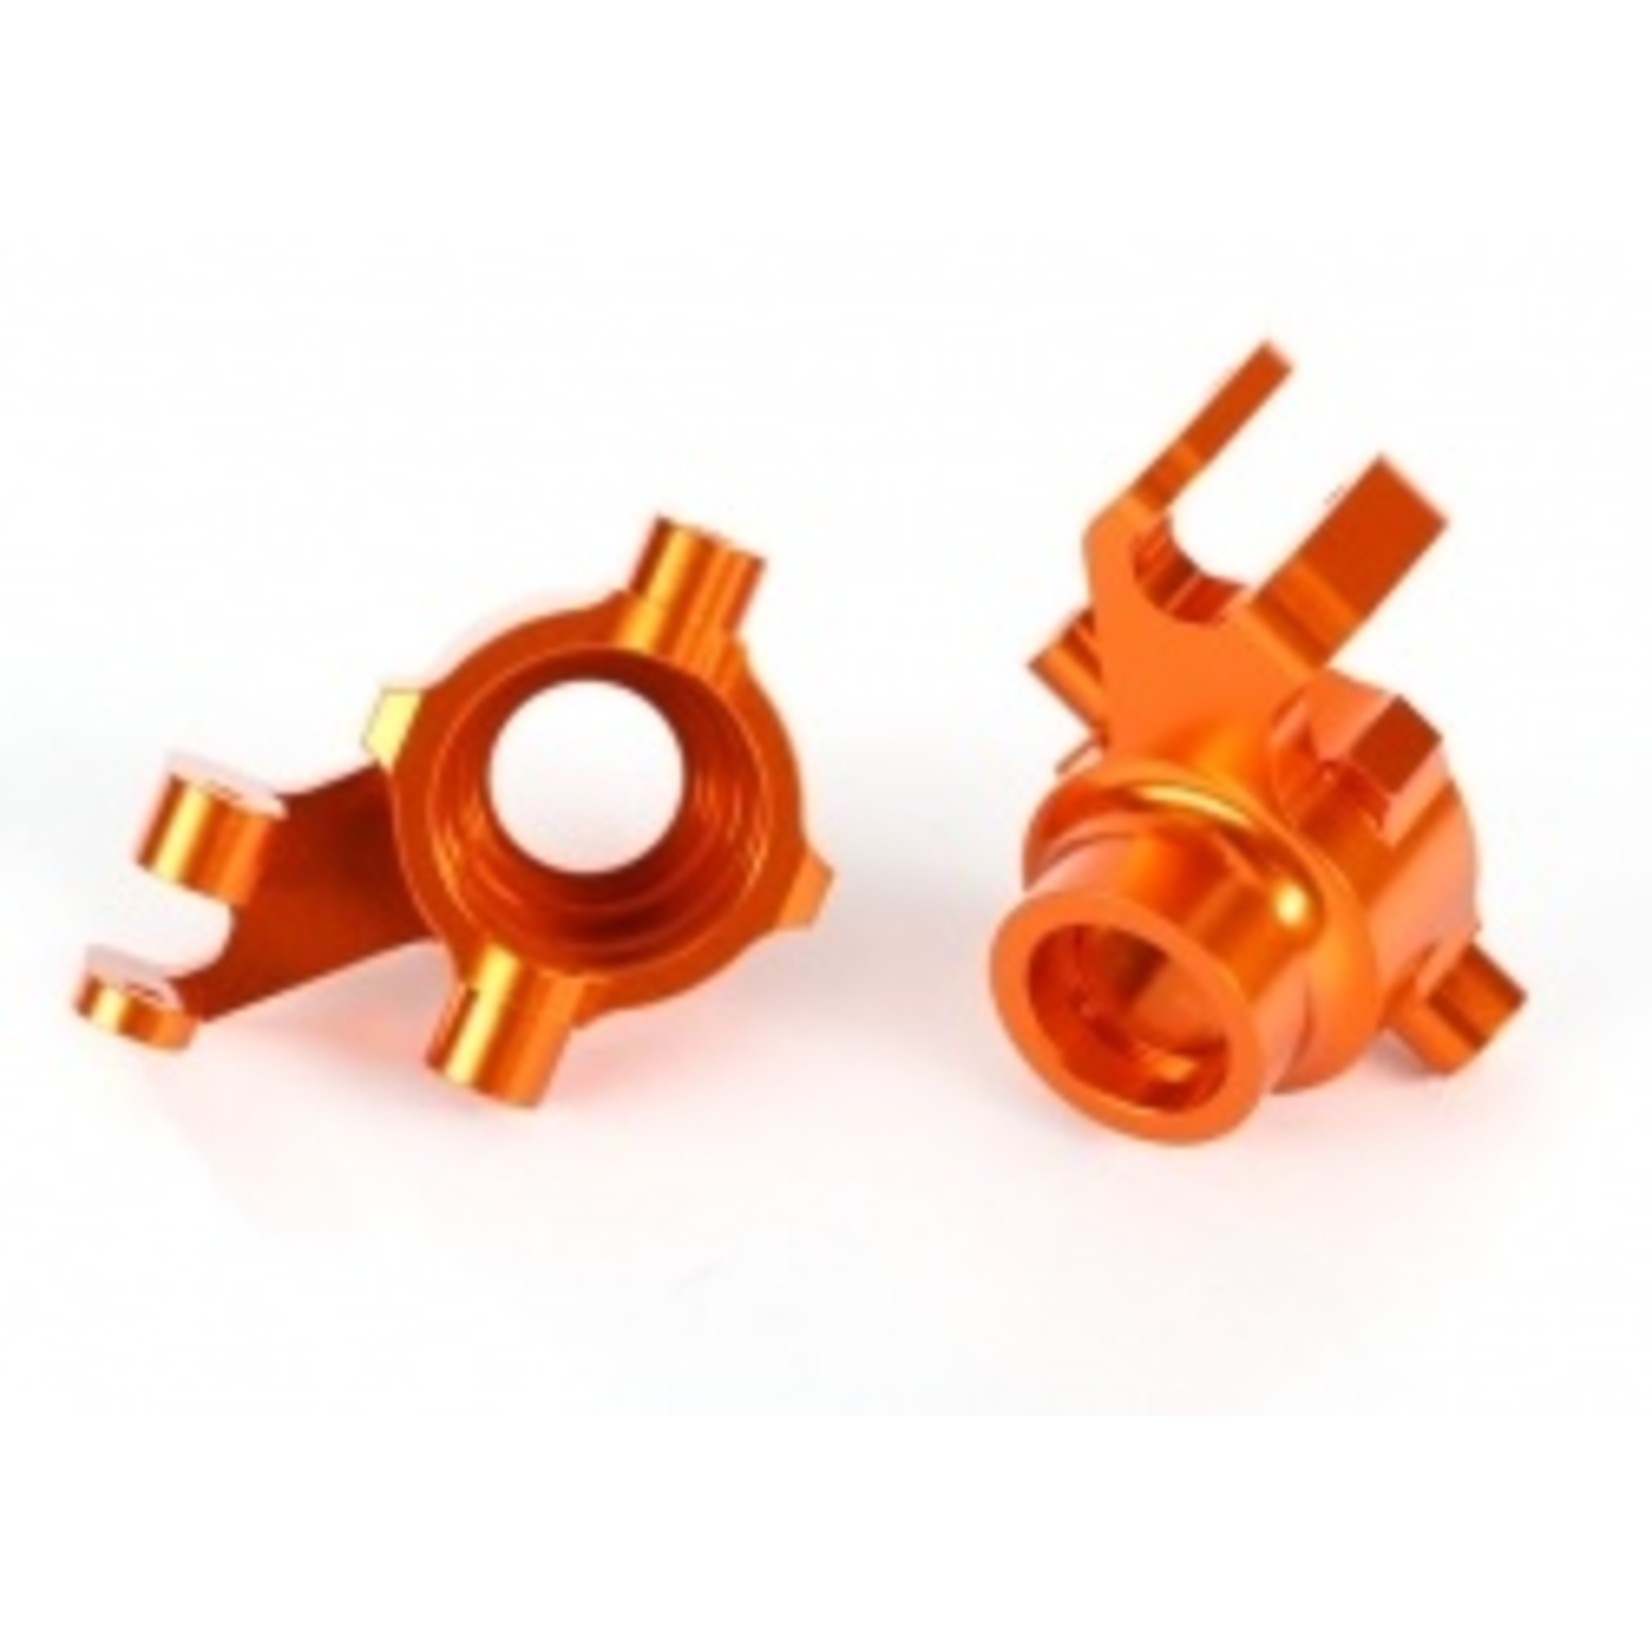 Traxxas Steering blocks, 6061-T6 aluminum (orange-anodized), left & right